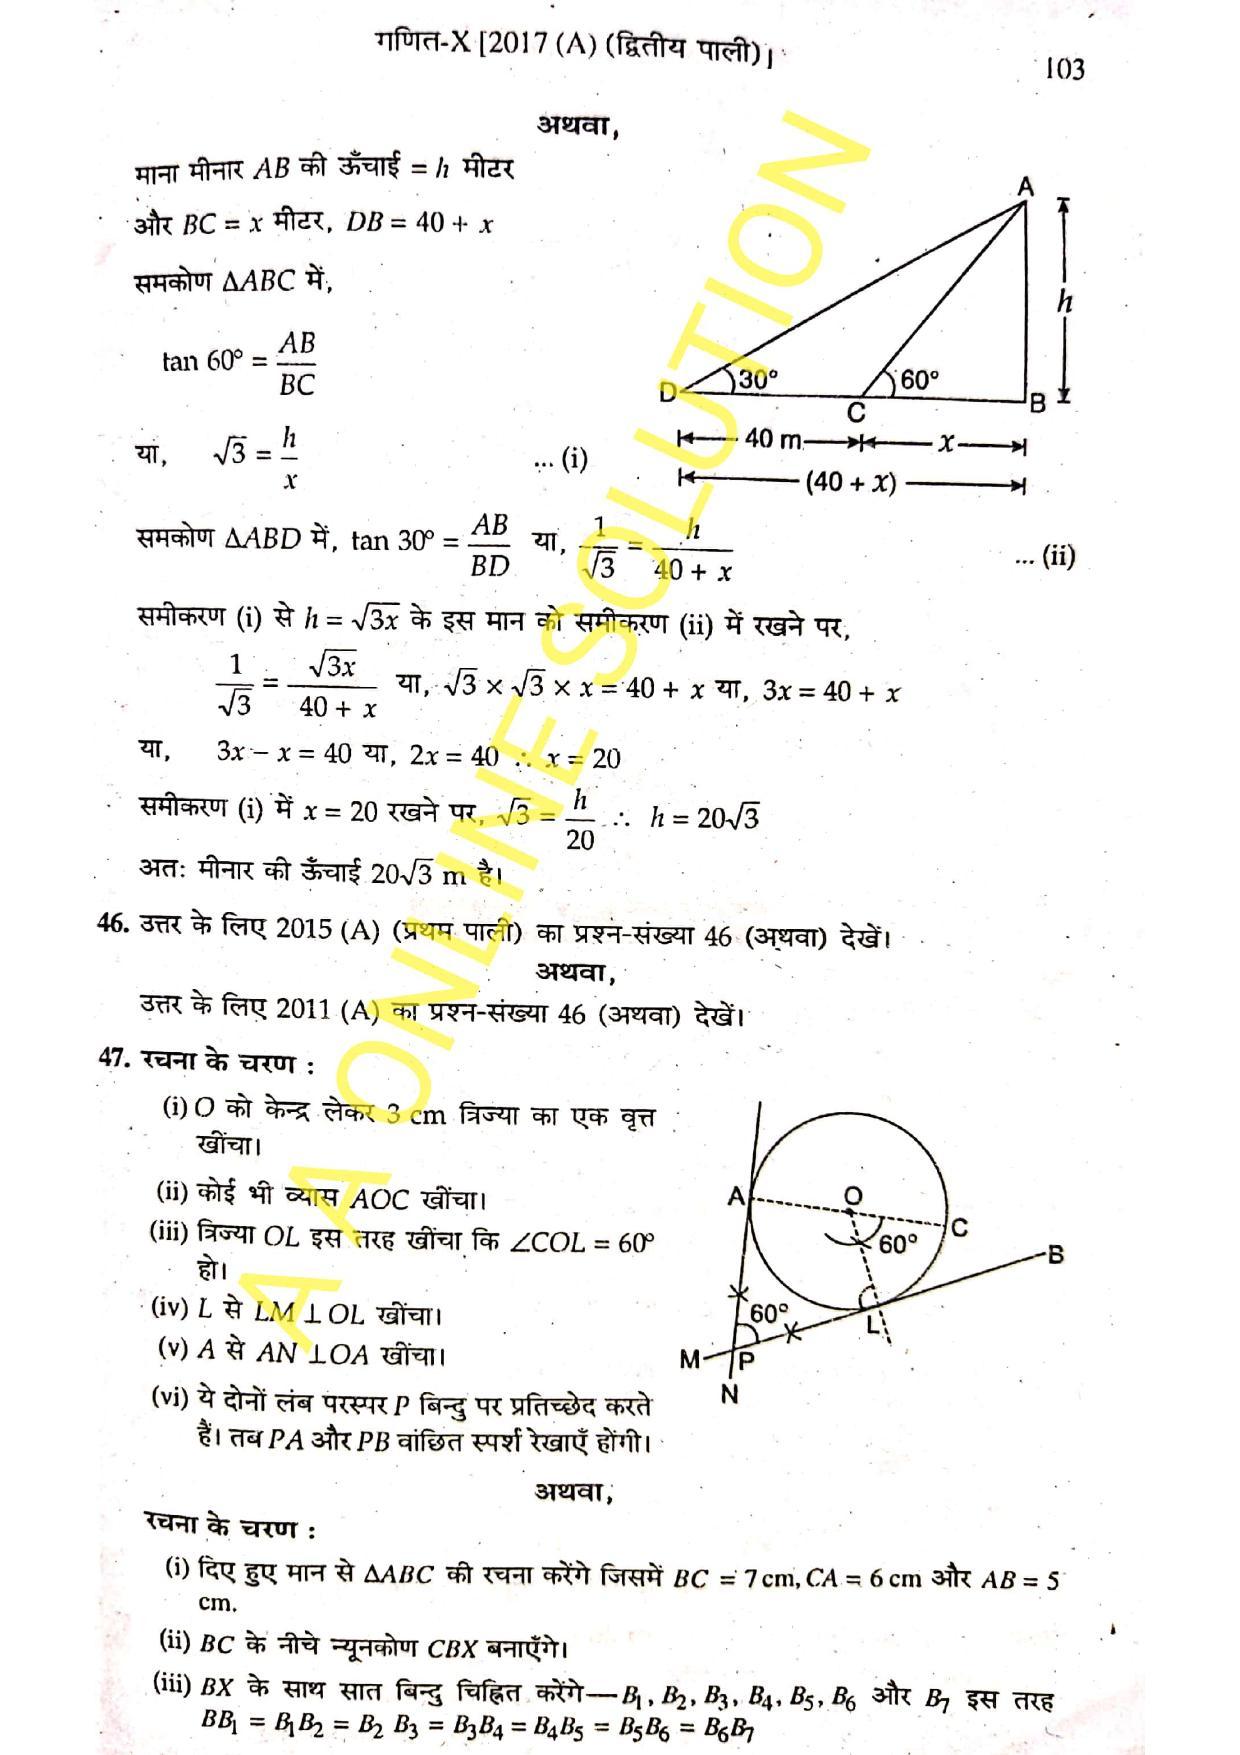 Bihar Board Class 10 Maths 2017 (2nd Sitting) Question Paper - Page 8